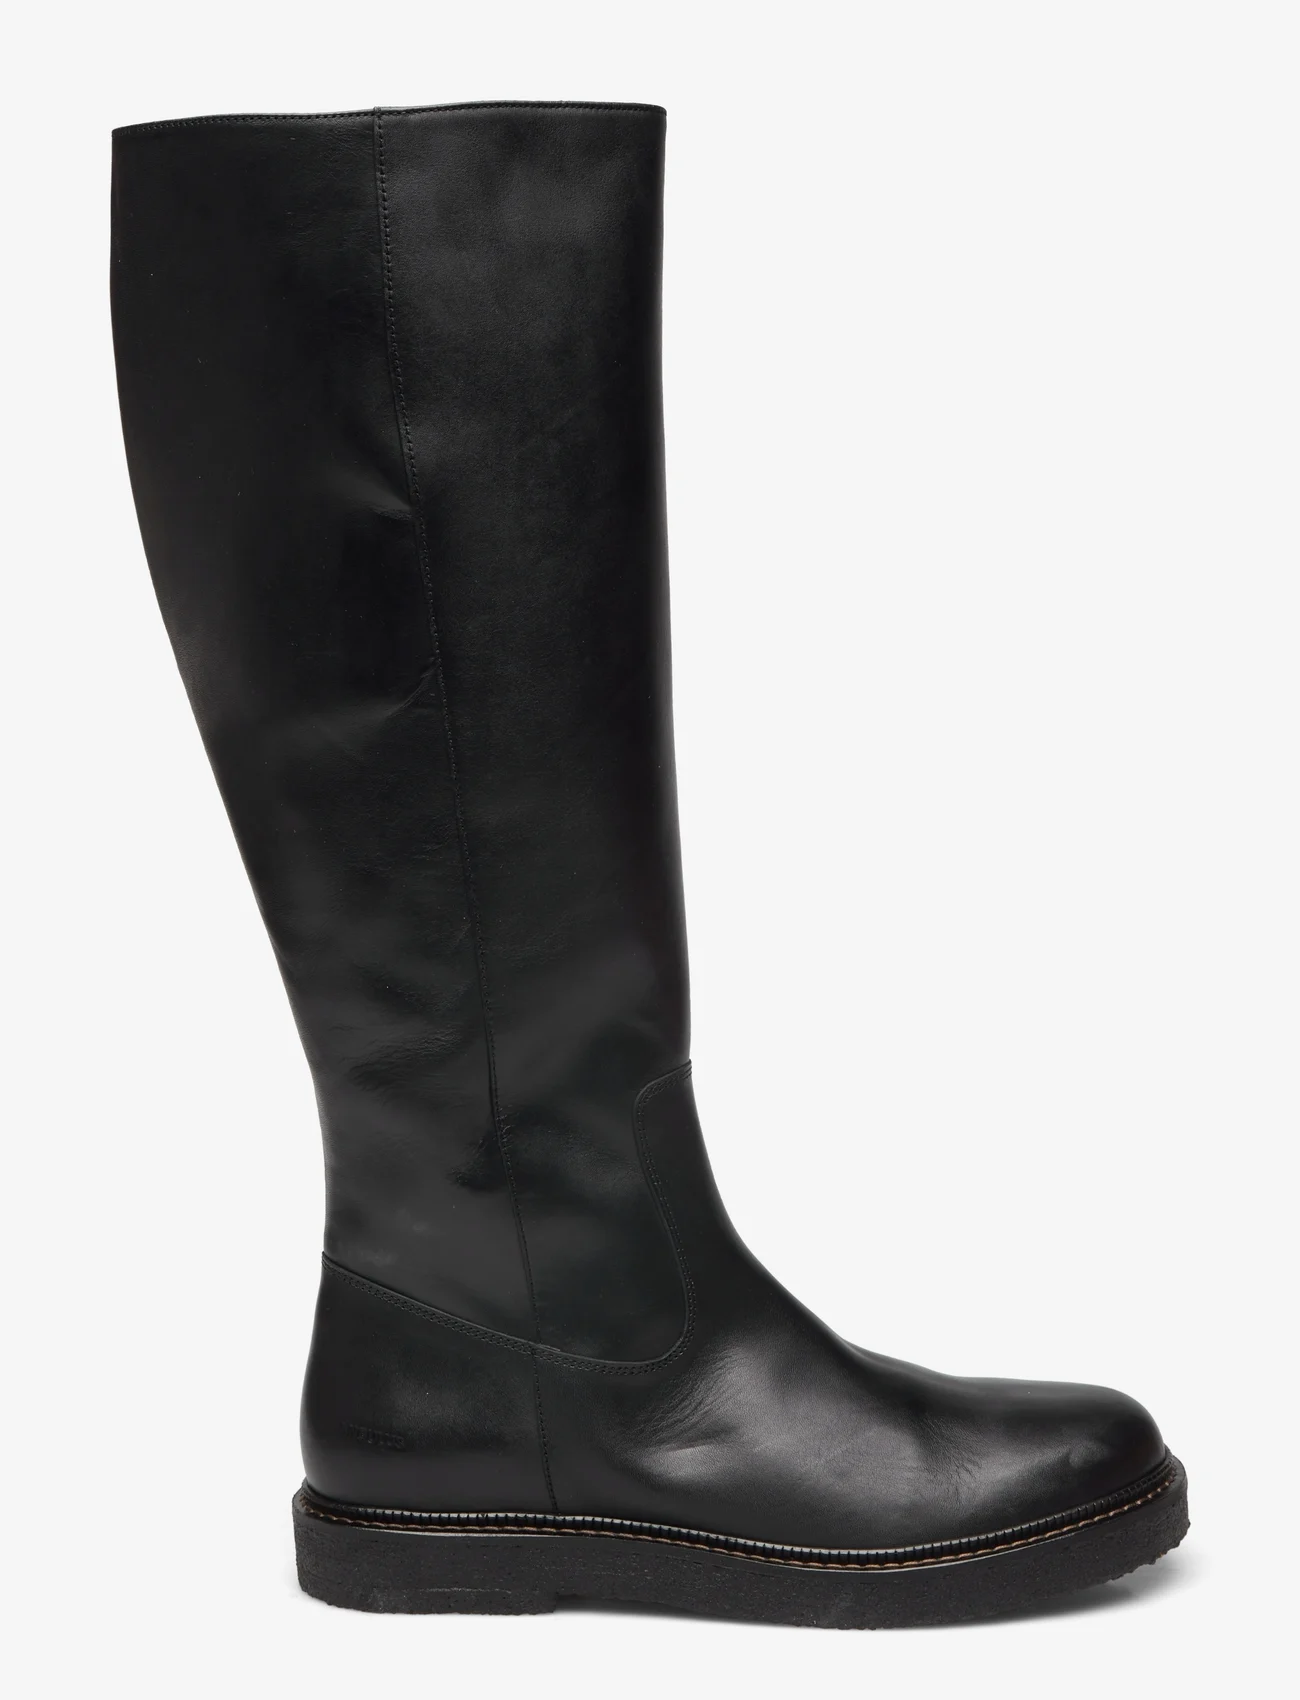 ANGULUS - Boots - flat - knee high boots - 1604/001 black/black - 1